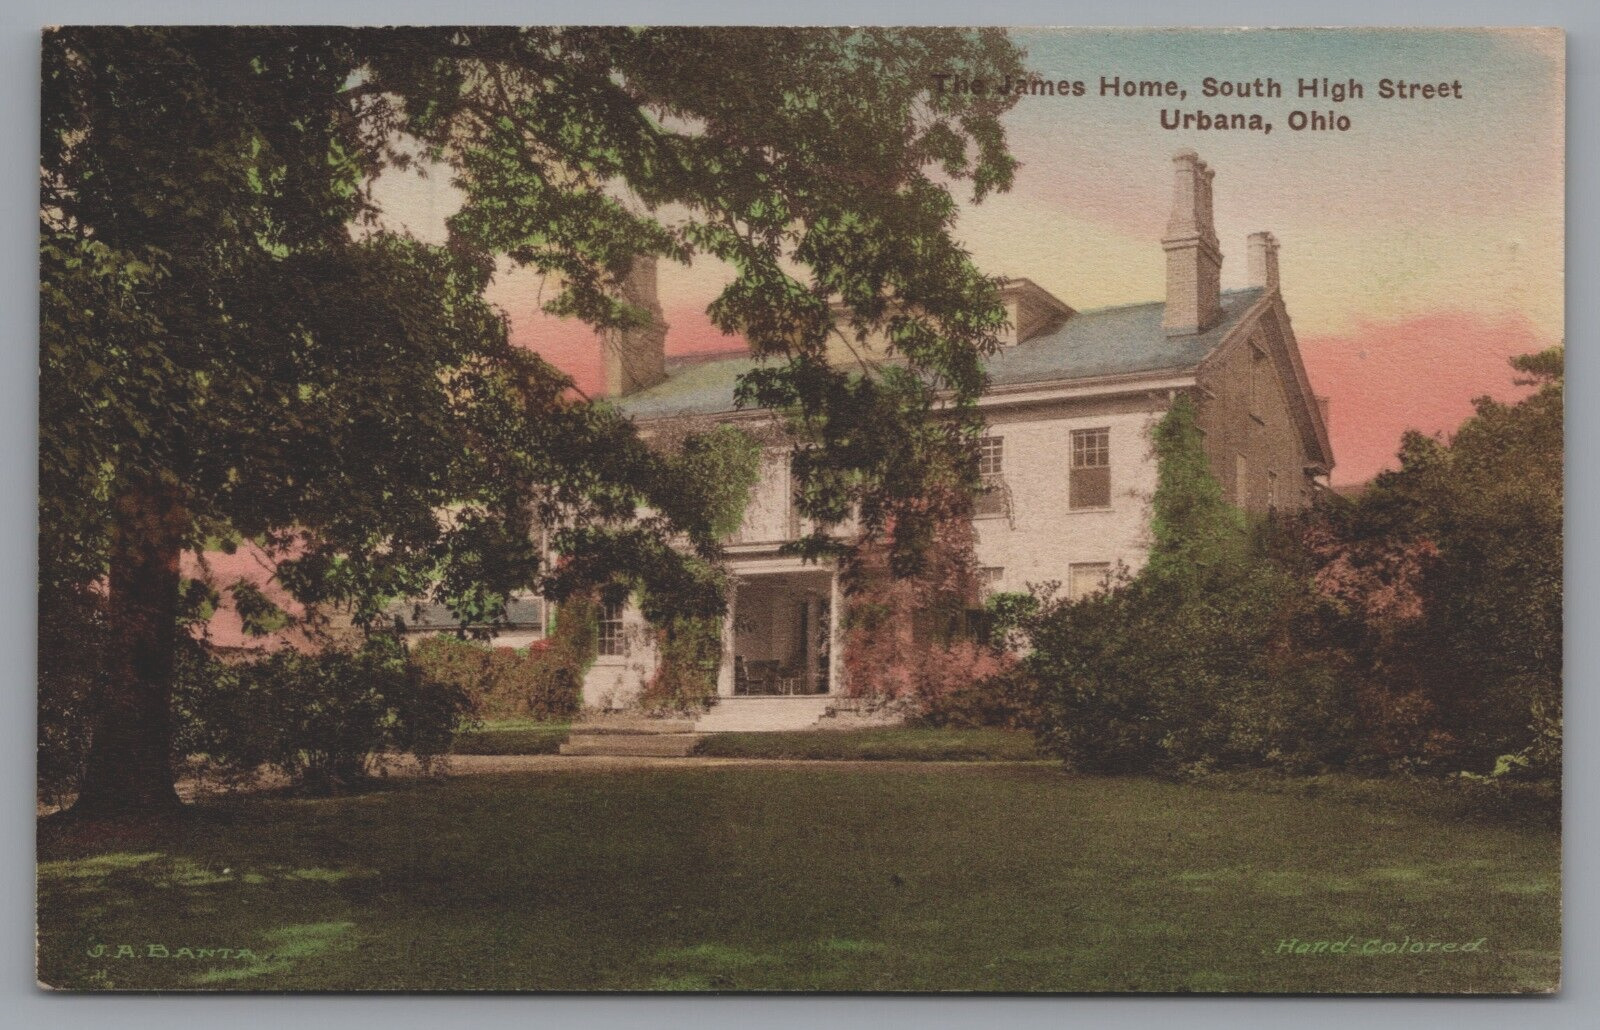 The James Home South High Street Urbana Ohio, Hand Colored Vintage Postcard 1938